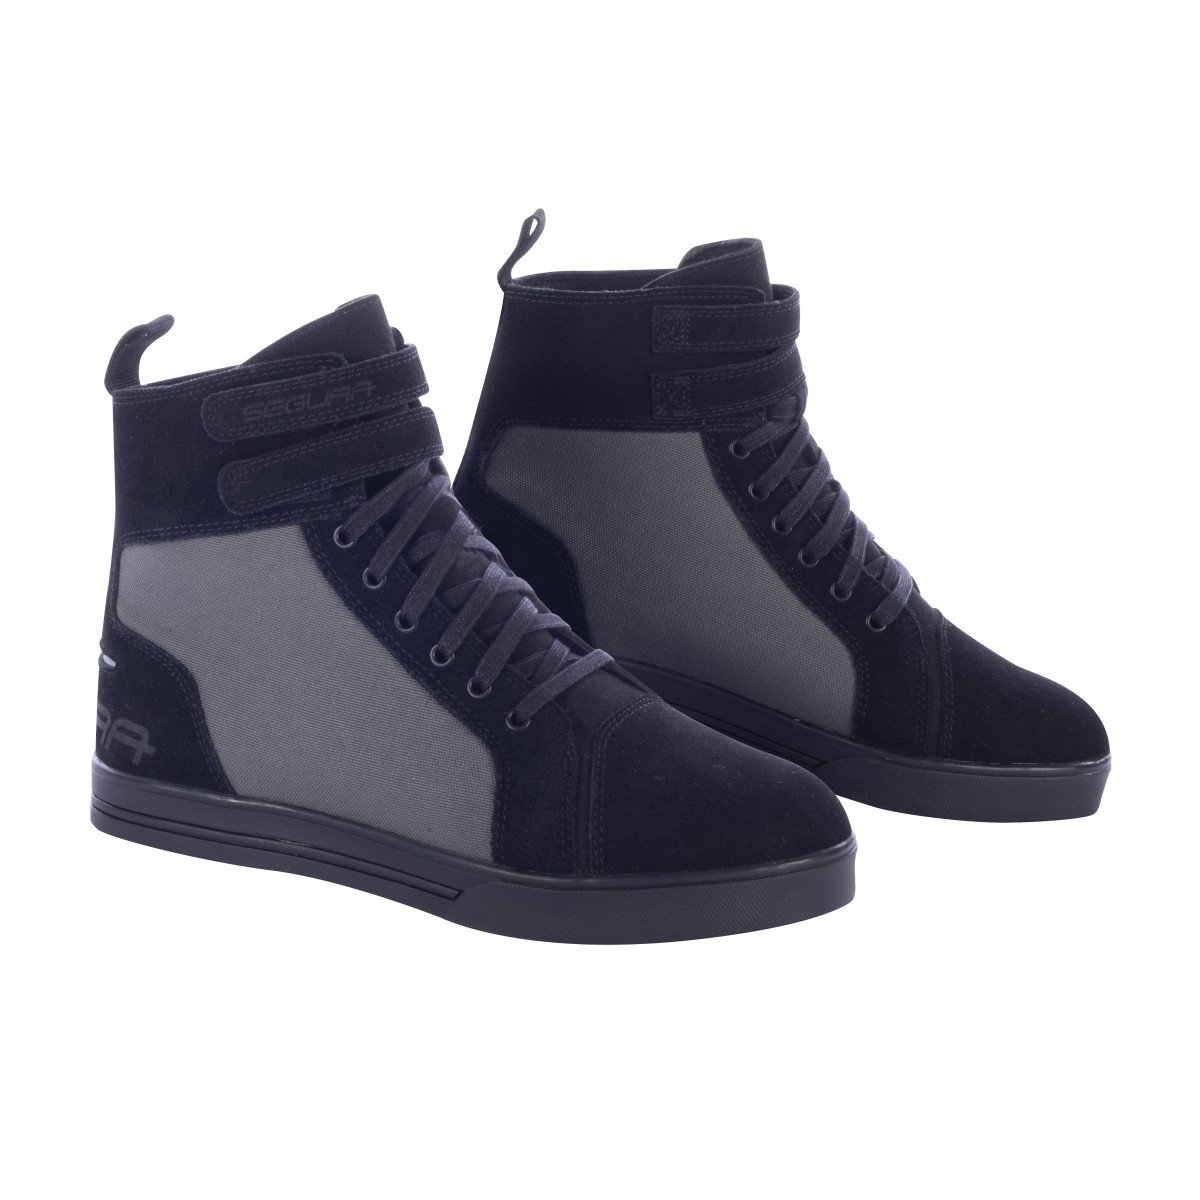 Image of Segura Sneakers Contact Black Grey Size 45 ID 3660815171585